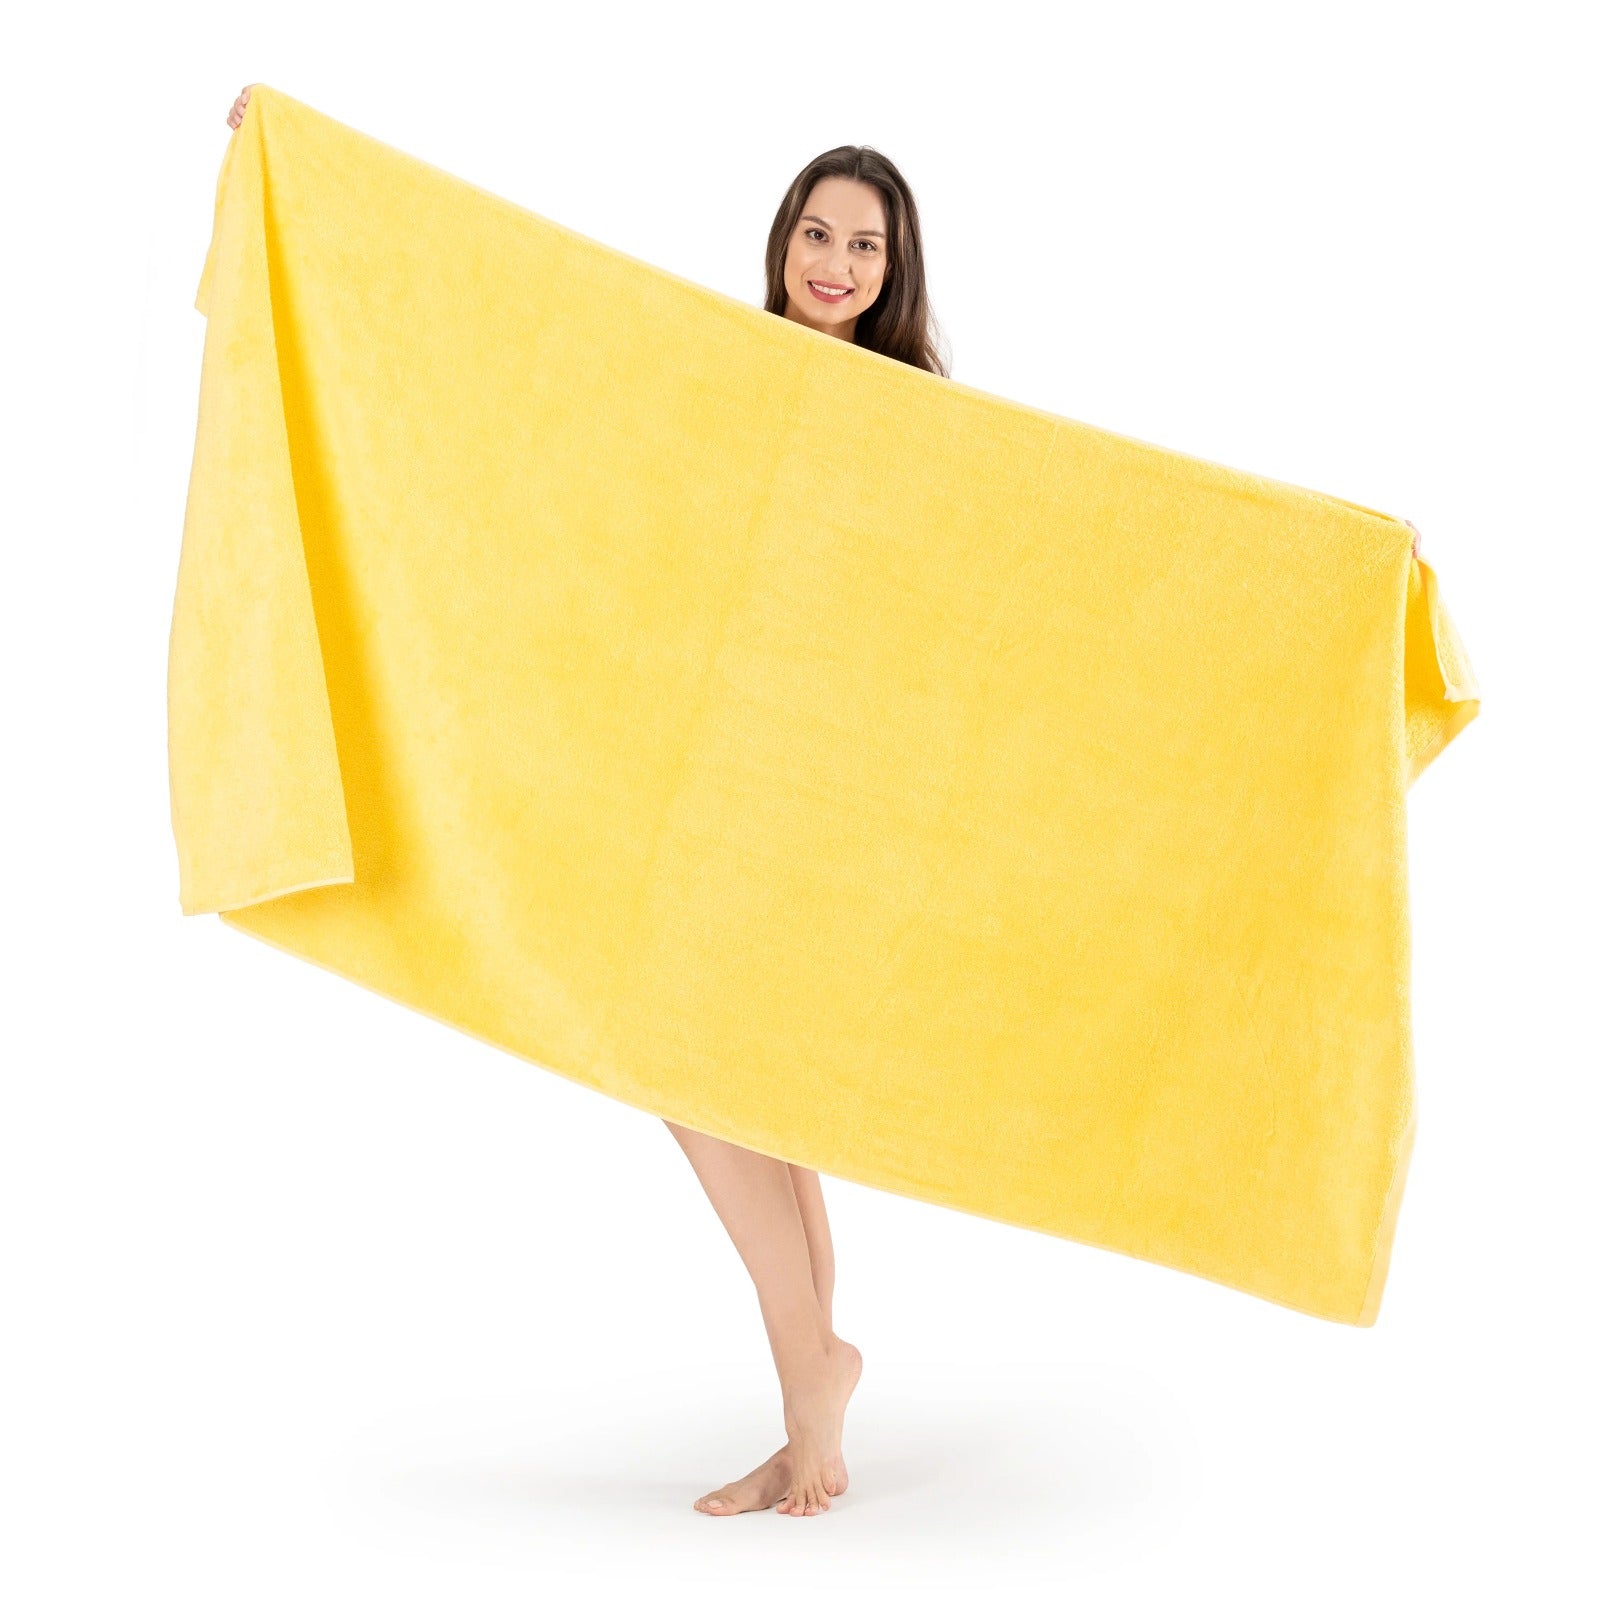 Cotton Paradise Oversized Bath Sheet, 100% Cotton 40x80 Clearance Bath Towel Sheet, Jumbo Large Bath Towel for Bathroom, Yellow